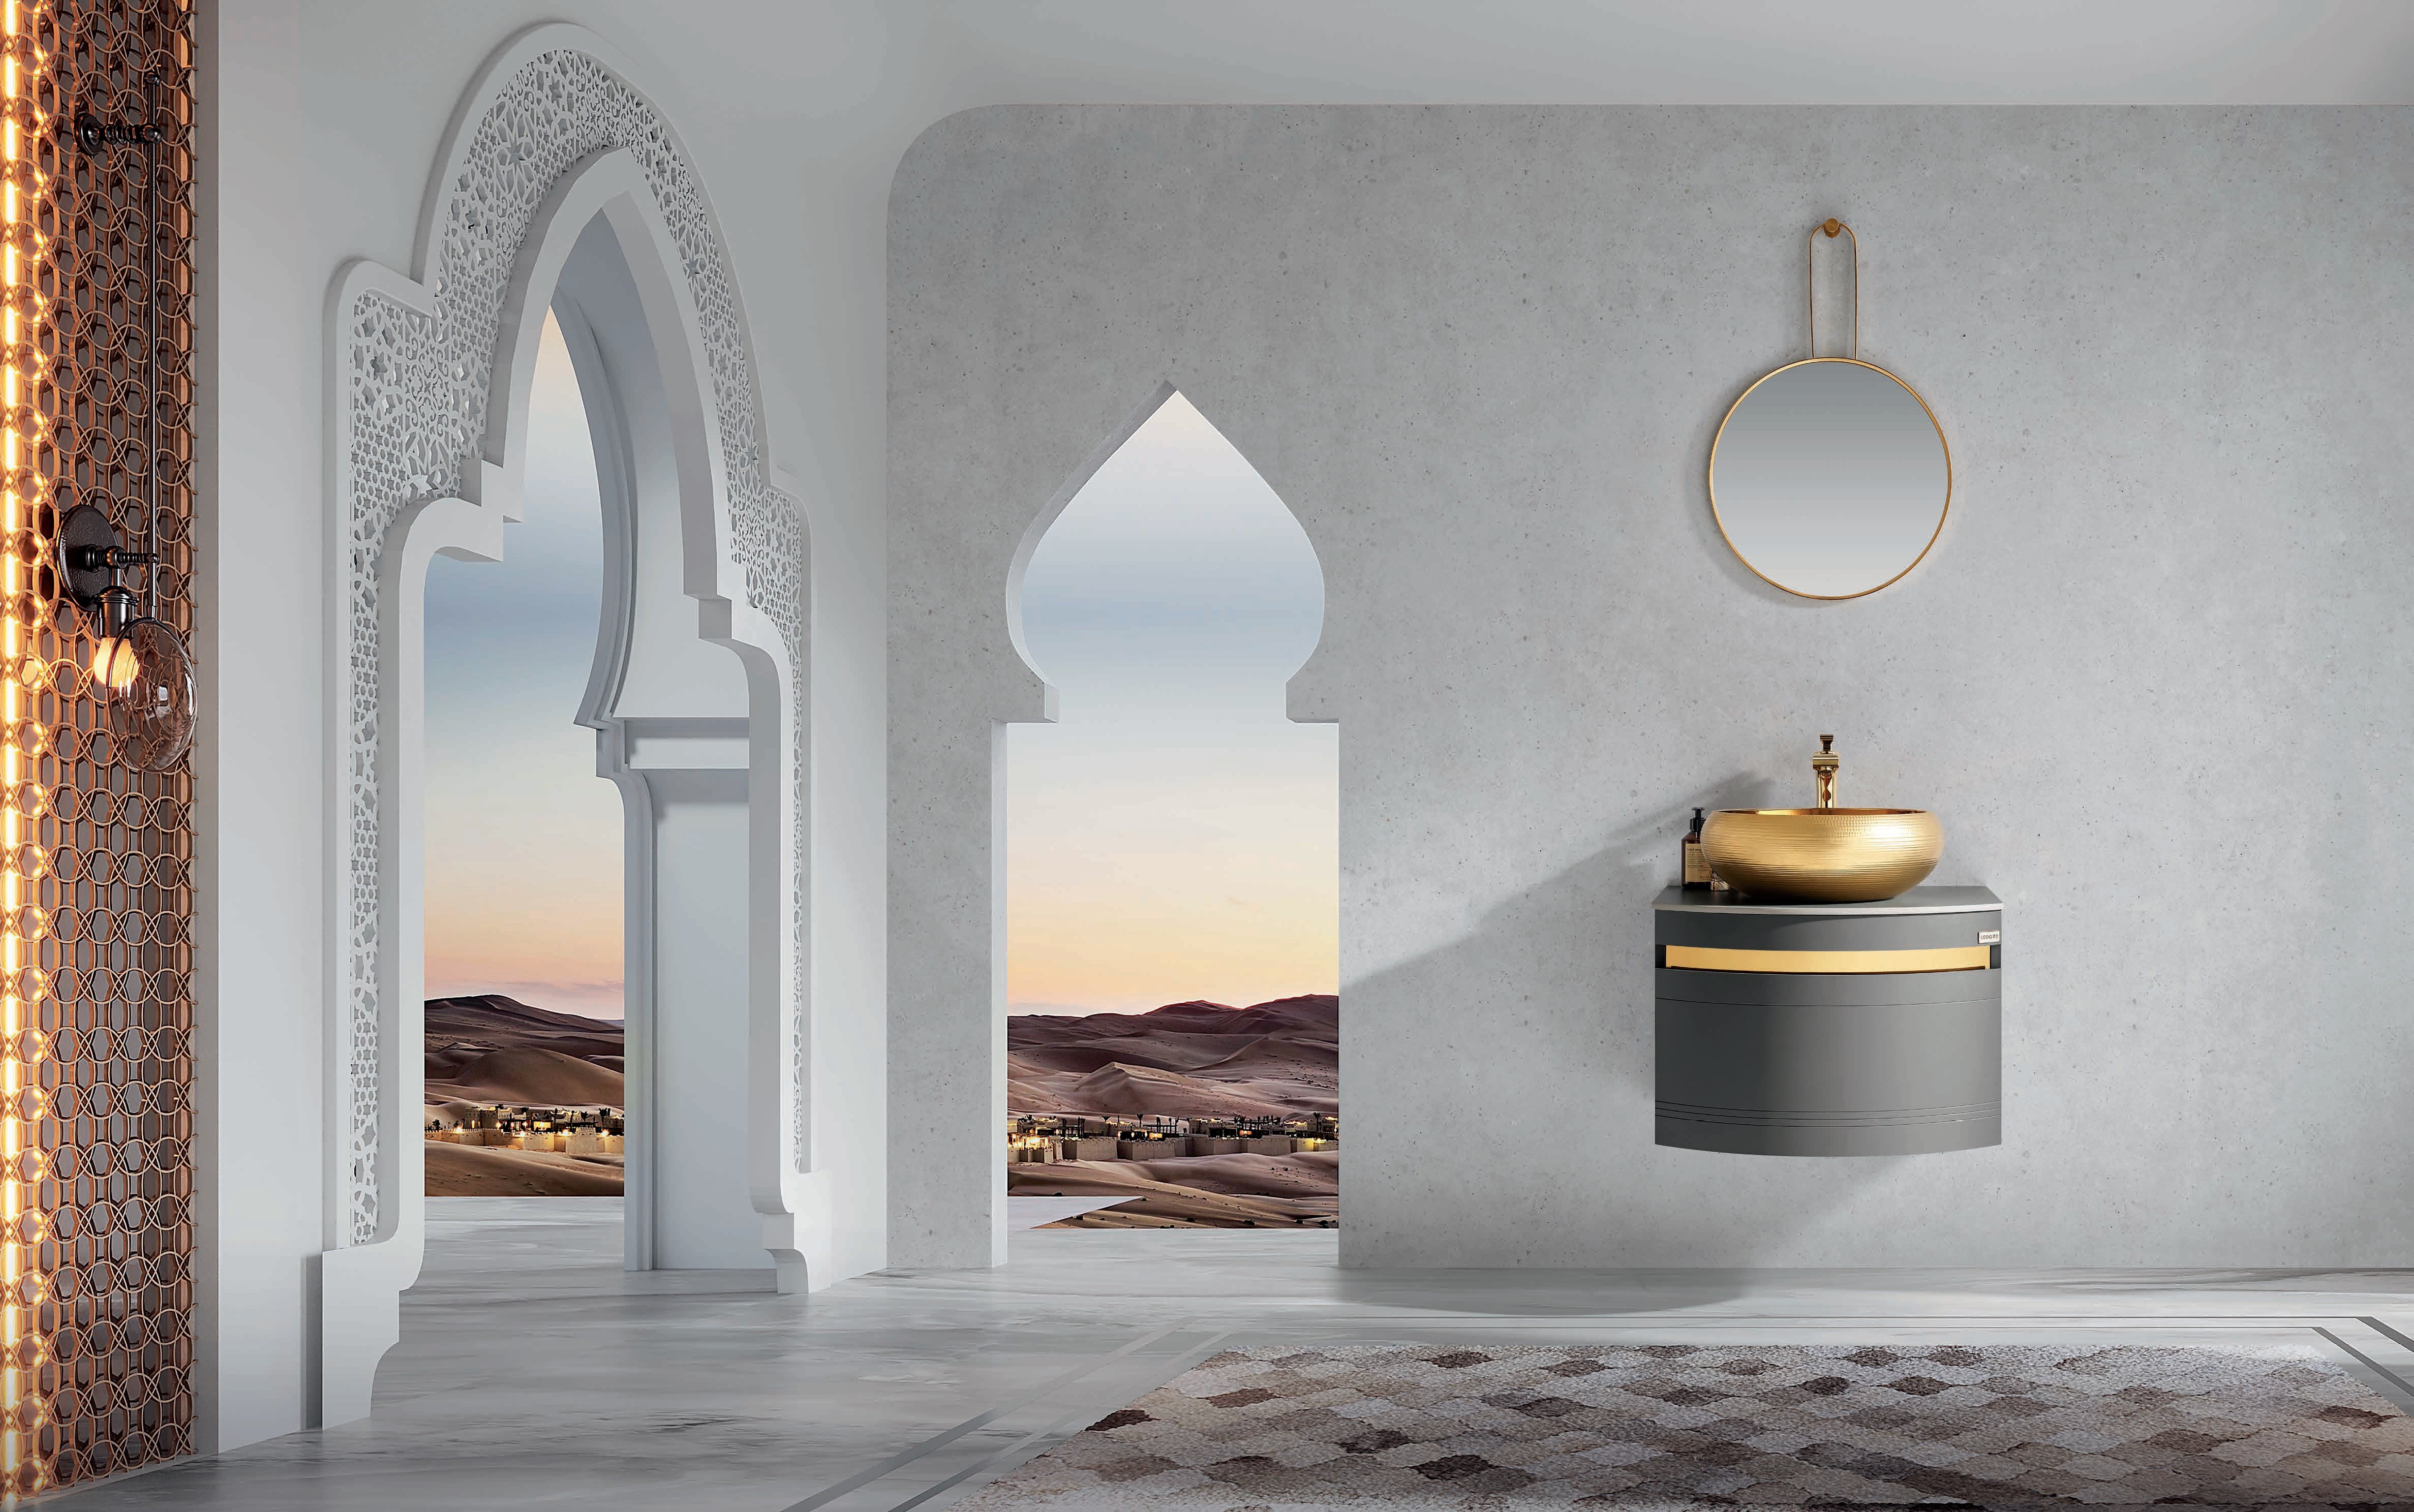 Luxurious Minimalist Gray and Gold Wall mount Bathroom Vanity Set